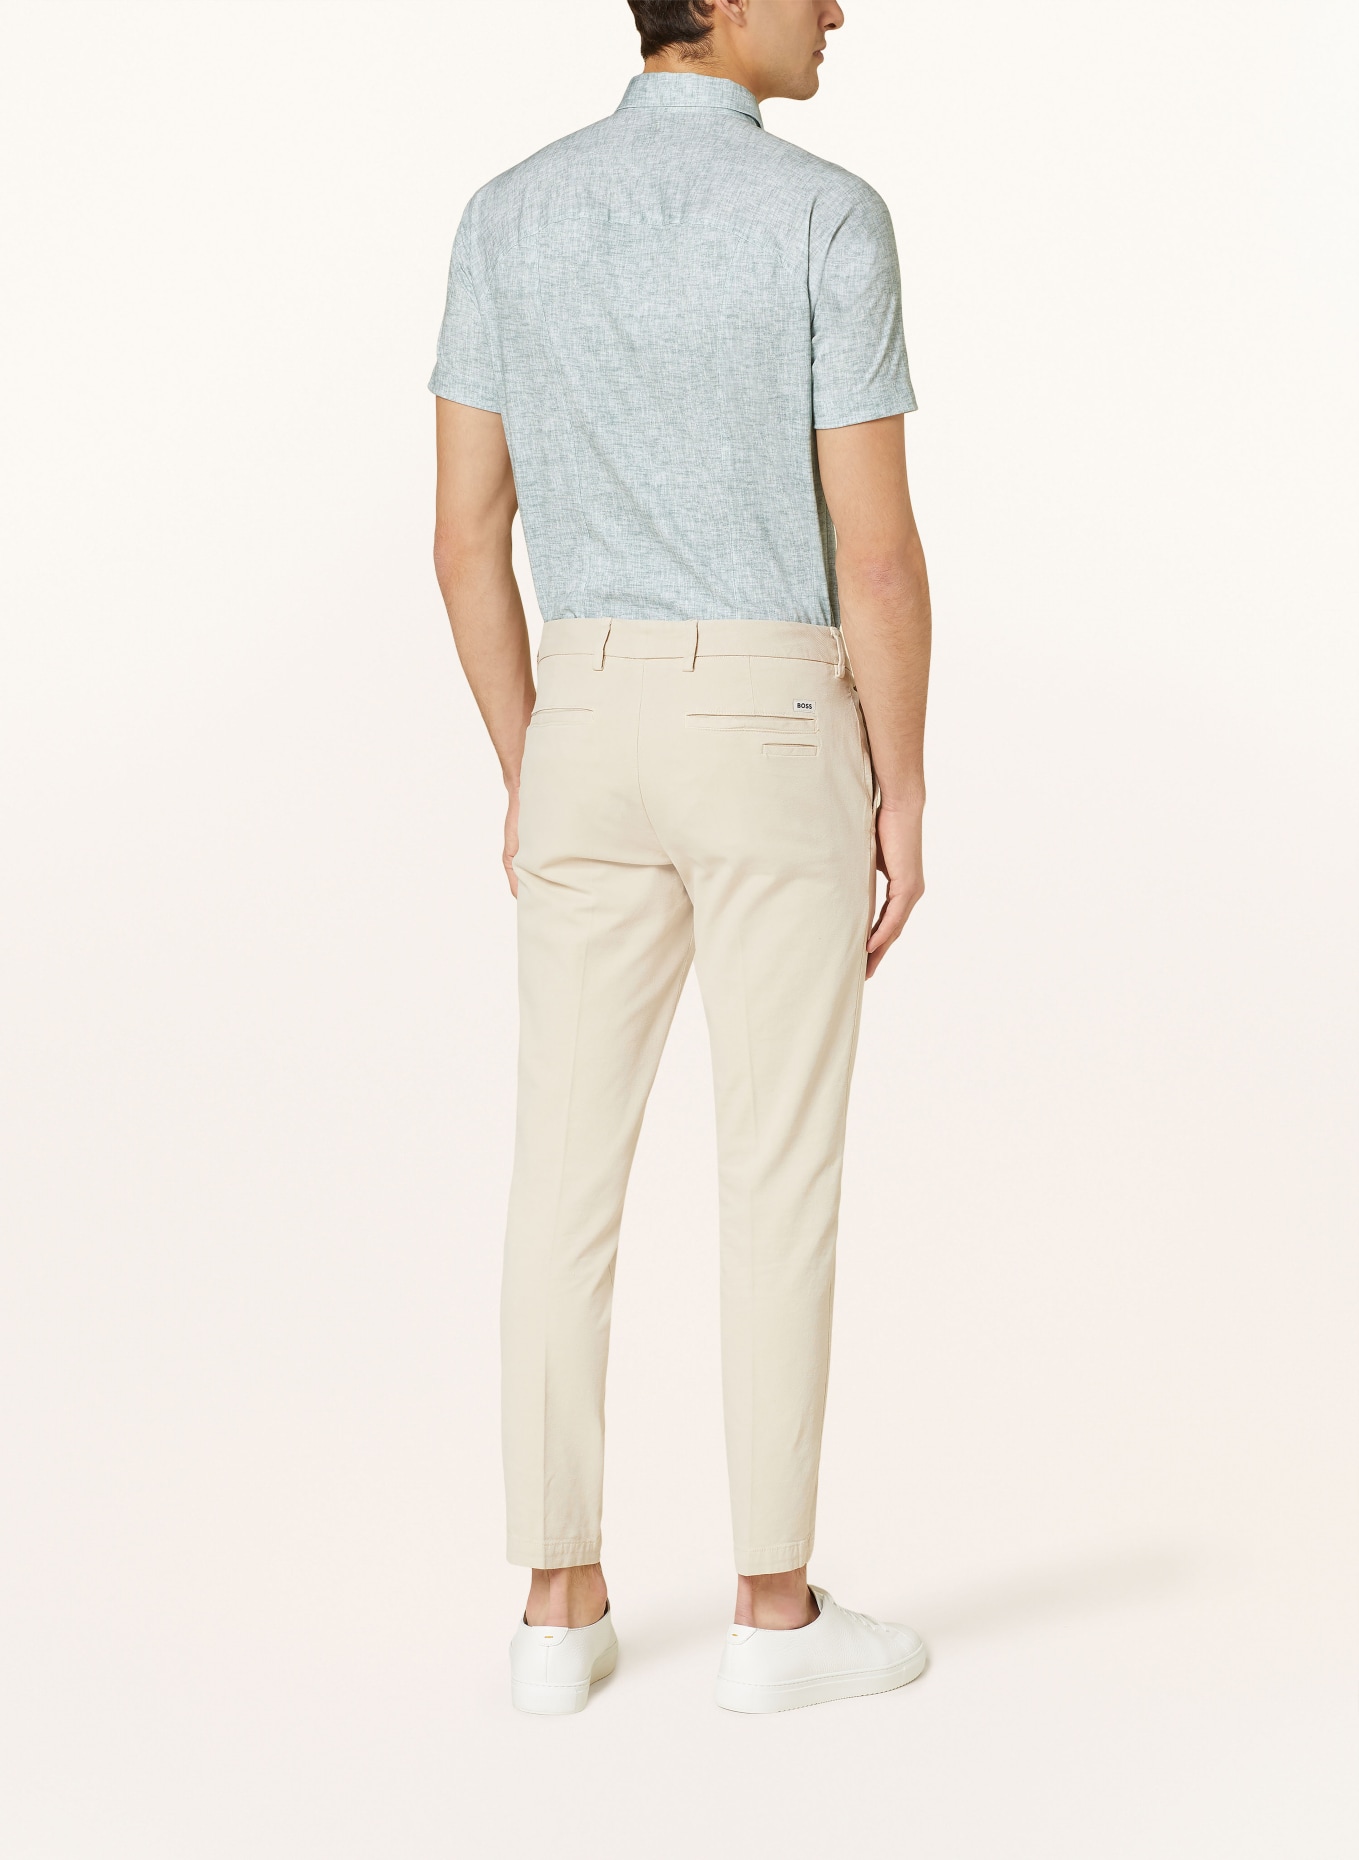 DESOTO Short sleeve shirt slim fit in jersey, Color: MINT (Image 3)